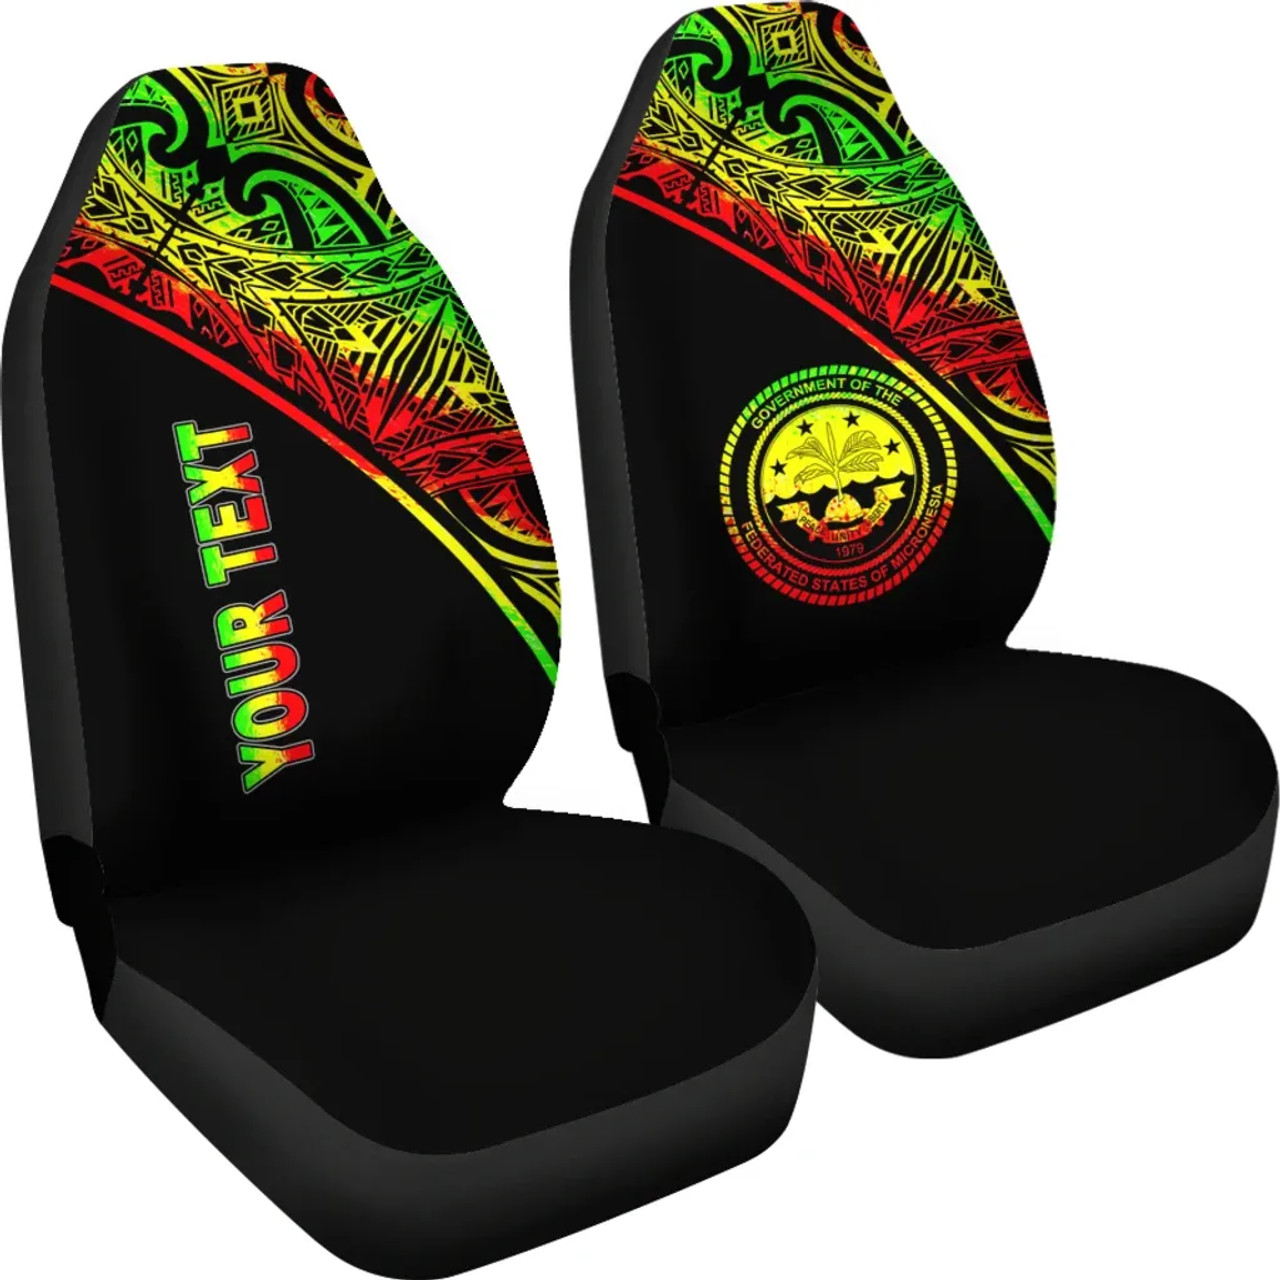 Federated States of Micronesia Car Seat Covers - FSM Seal Polynesian Reggae Curve